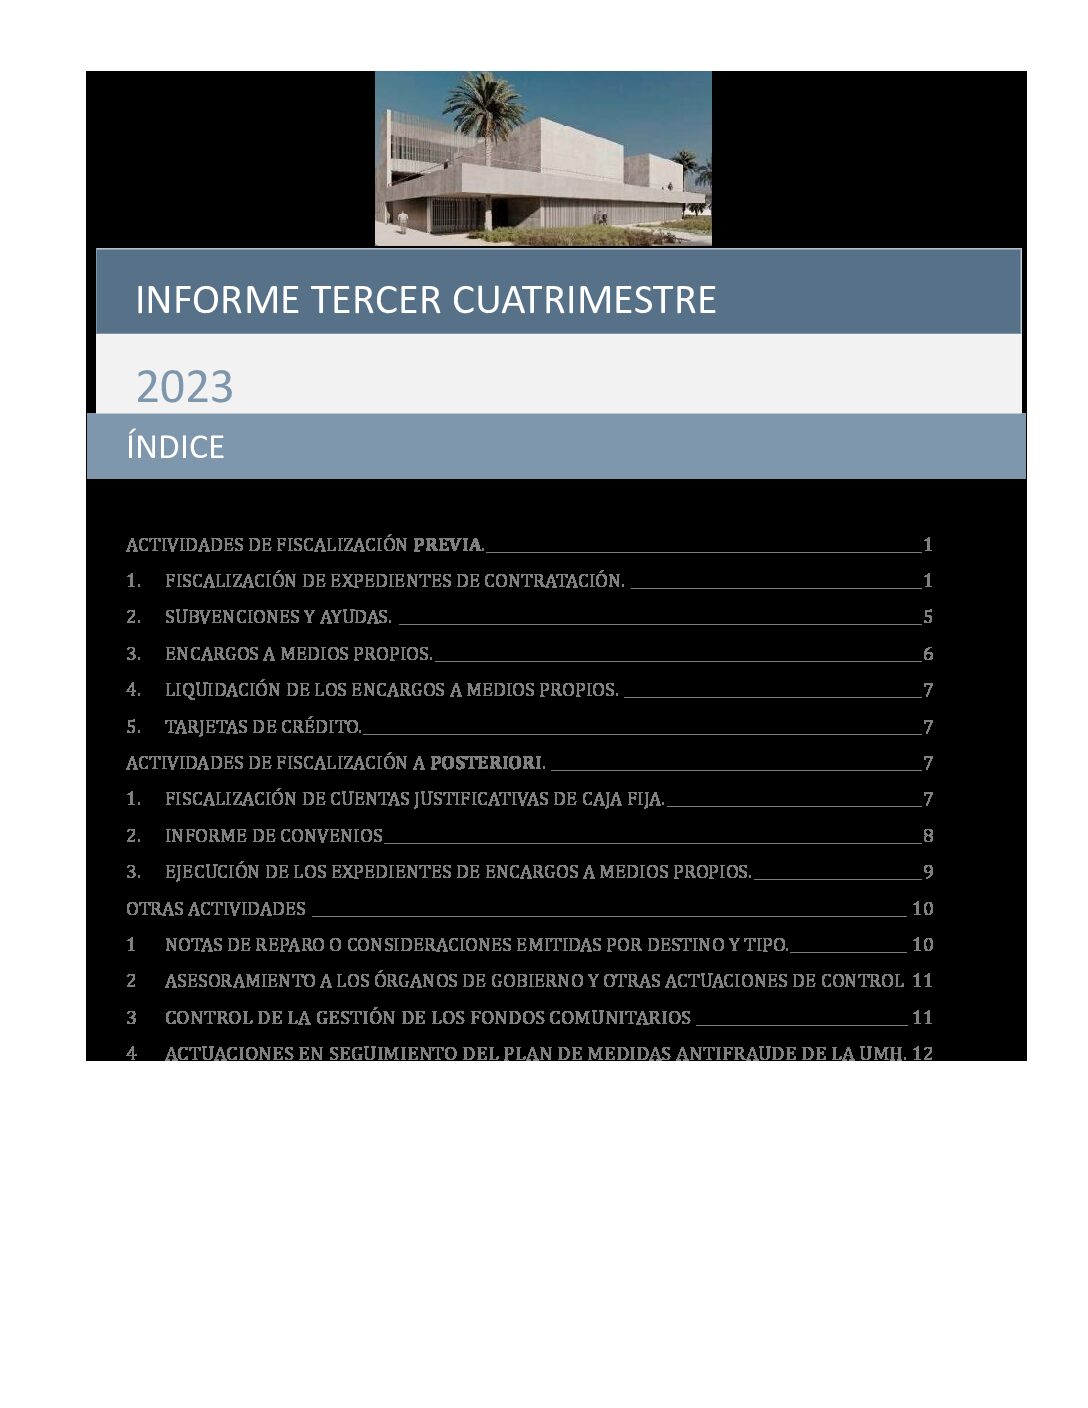 INFORME TERCER CUATRIMESTRE 2023 EN PDF